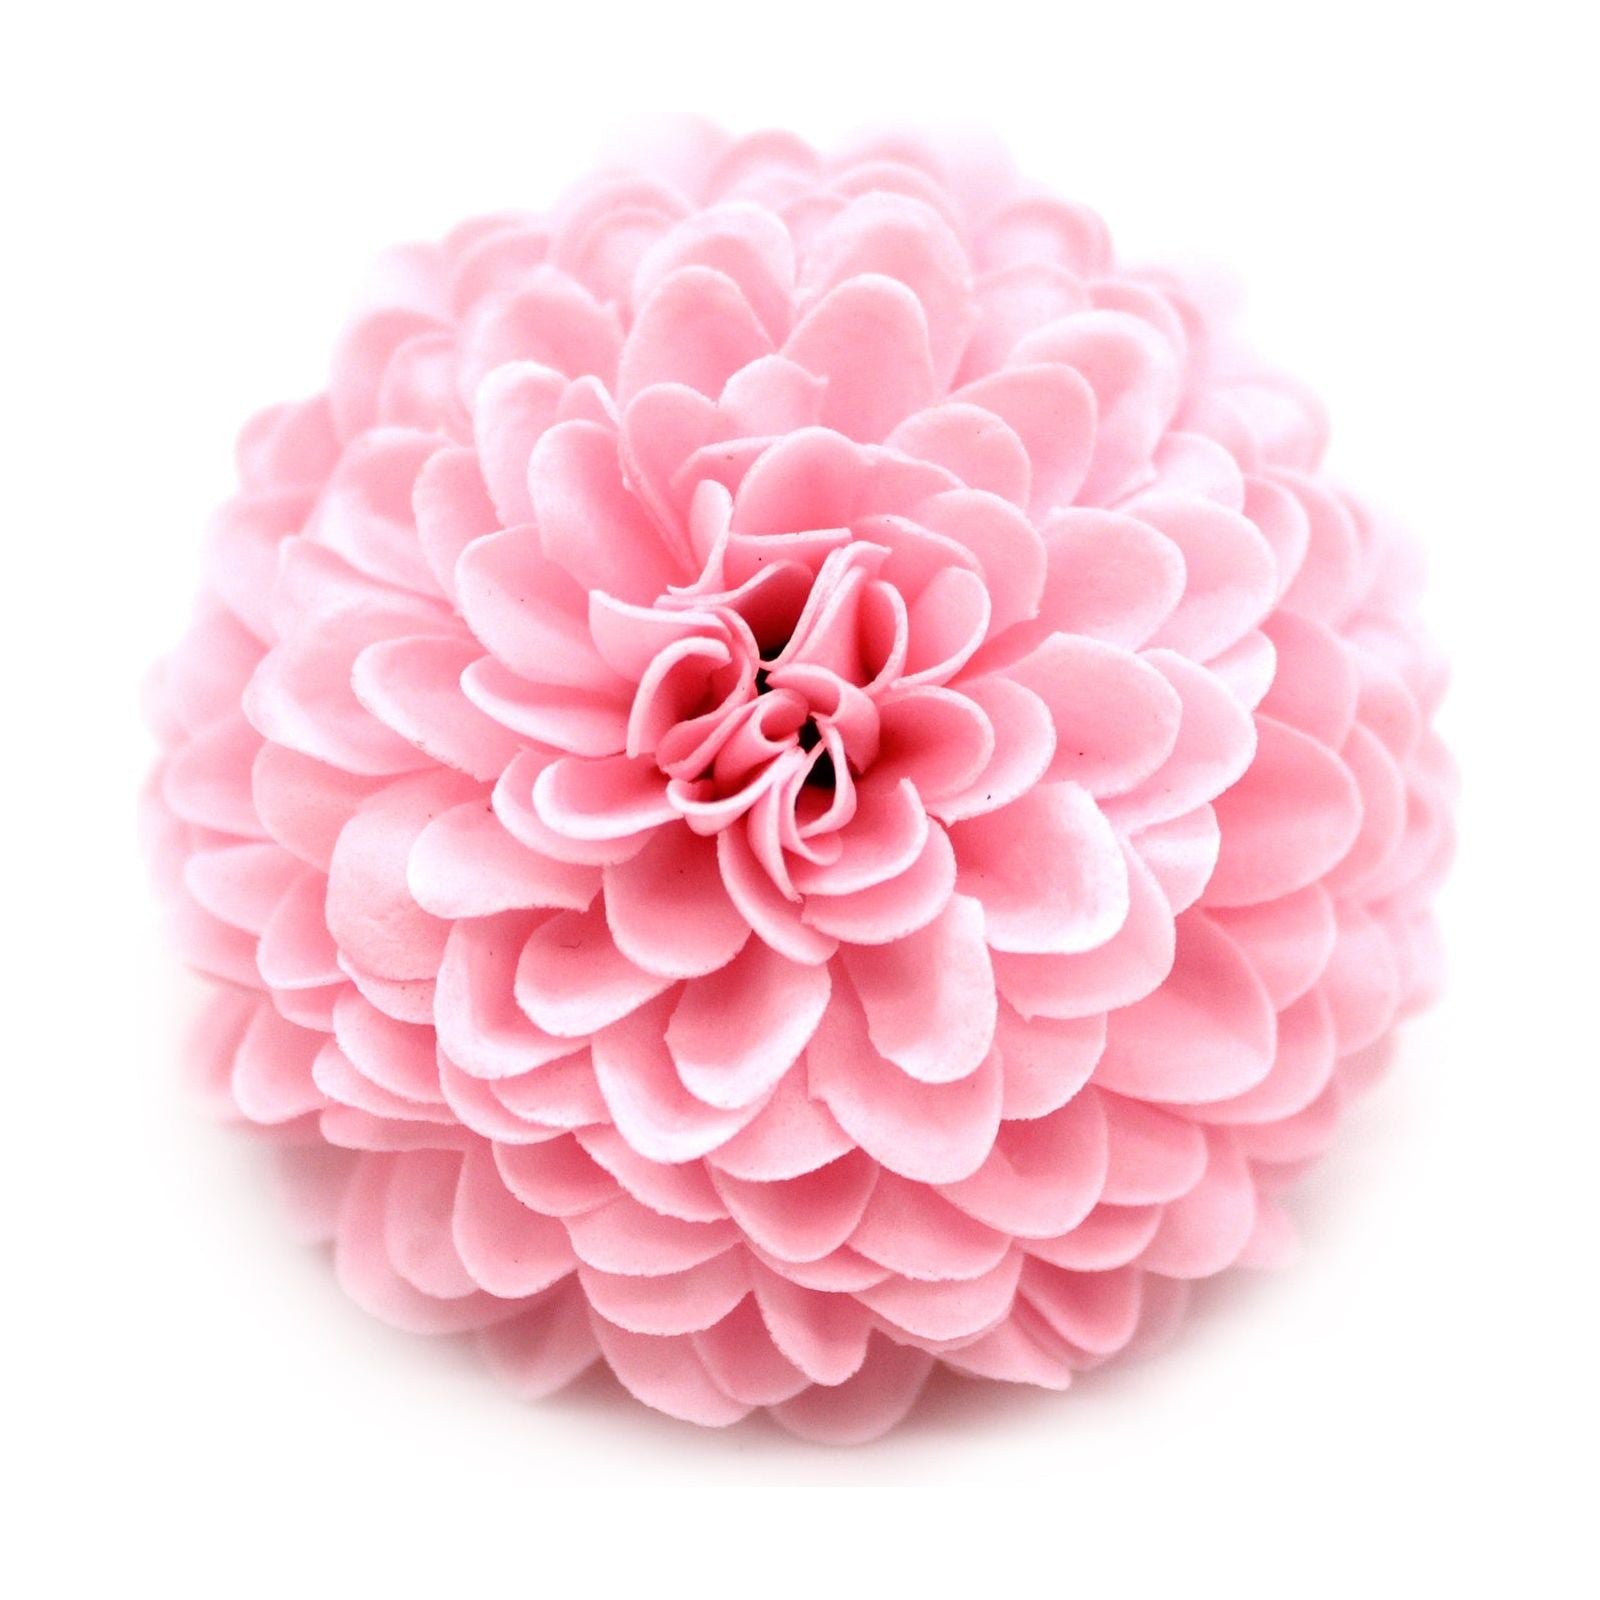 Light Pink Small Chrysanthemum Craft Soap Flowers x 10 - Ashton and Finch